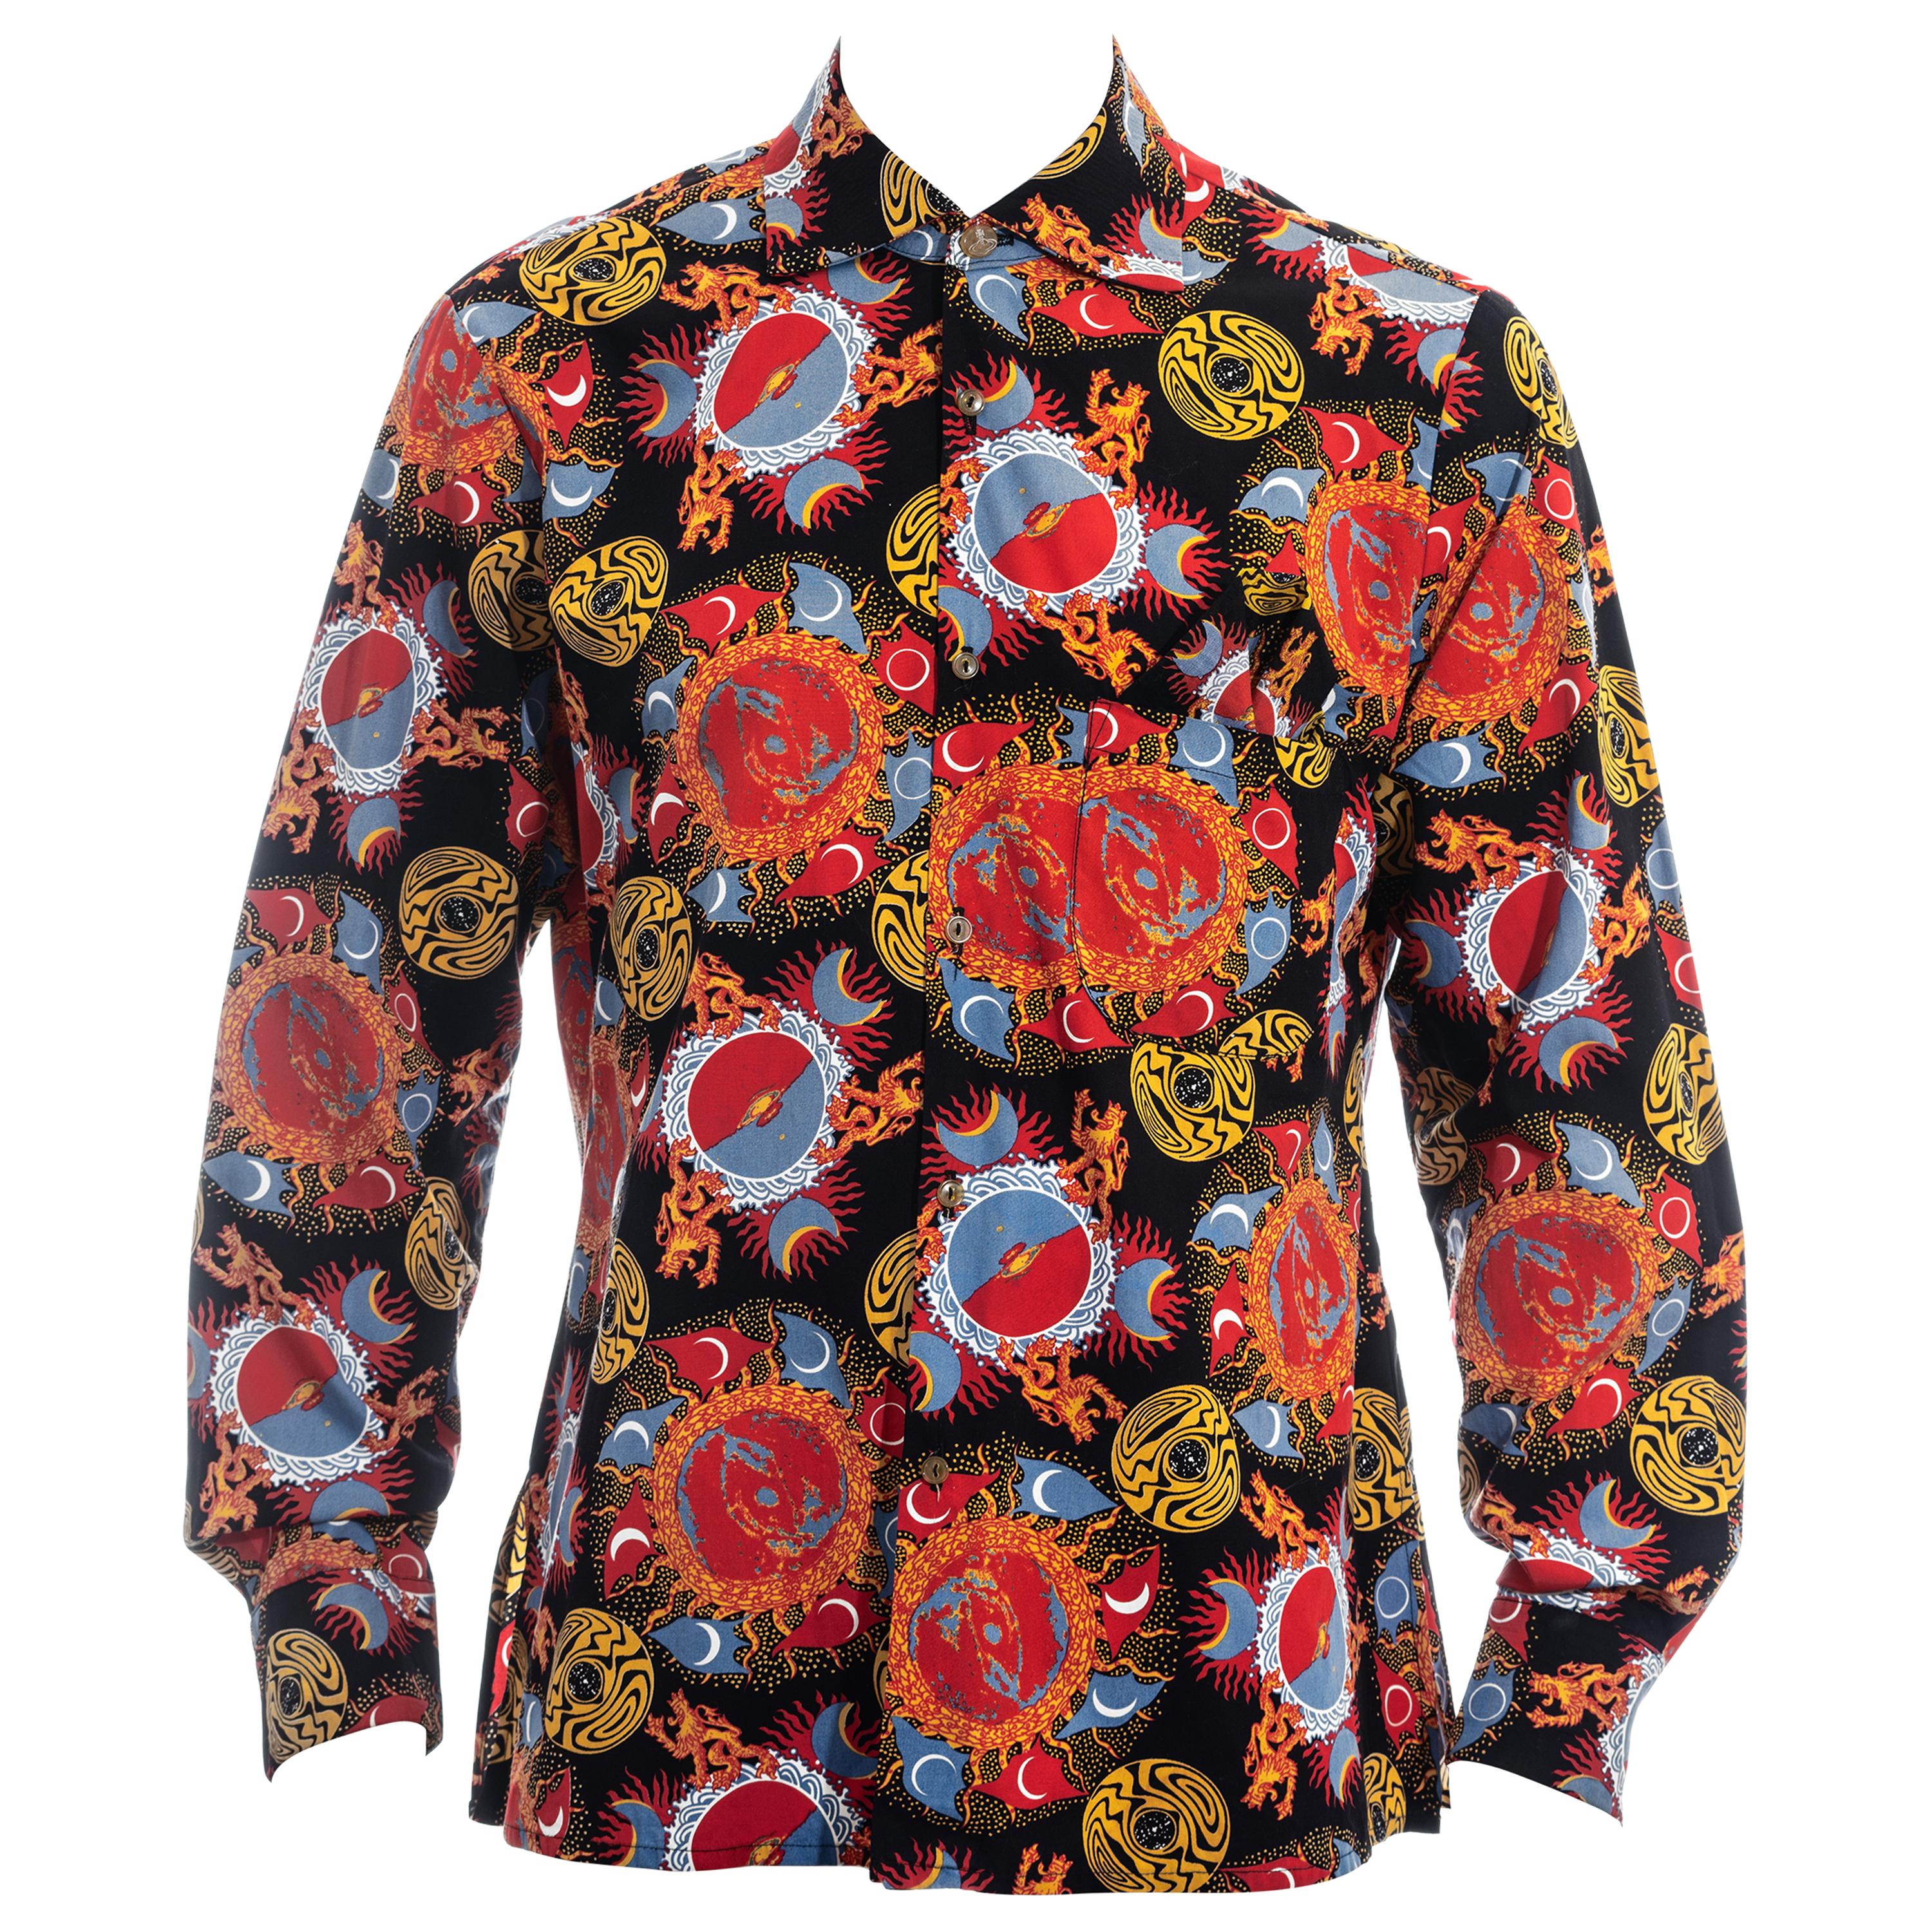 Men's Vivienne Westwood galaxy print cotton shirt and pocket square, ss 1988